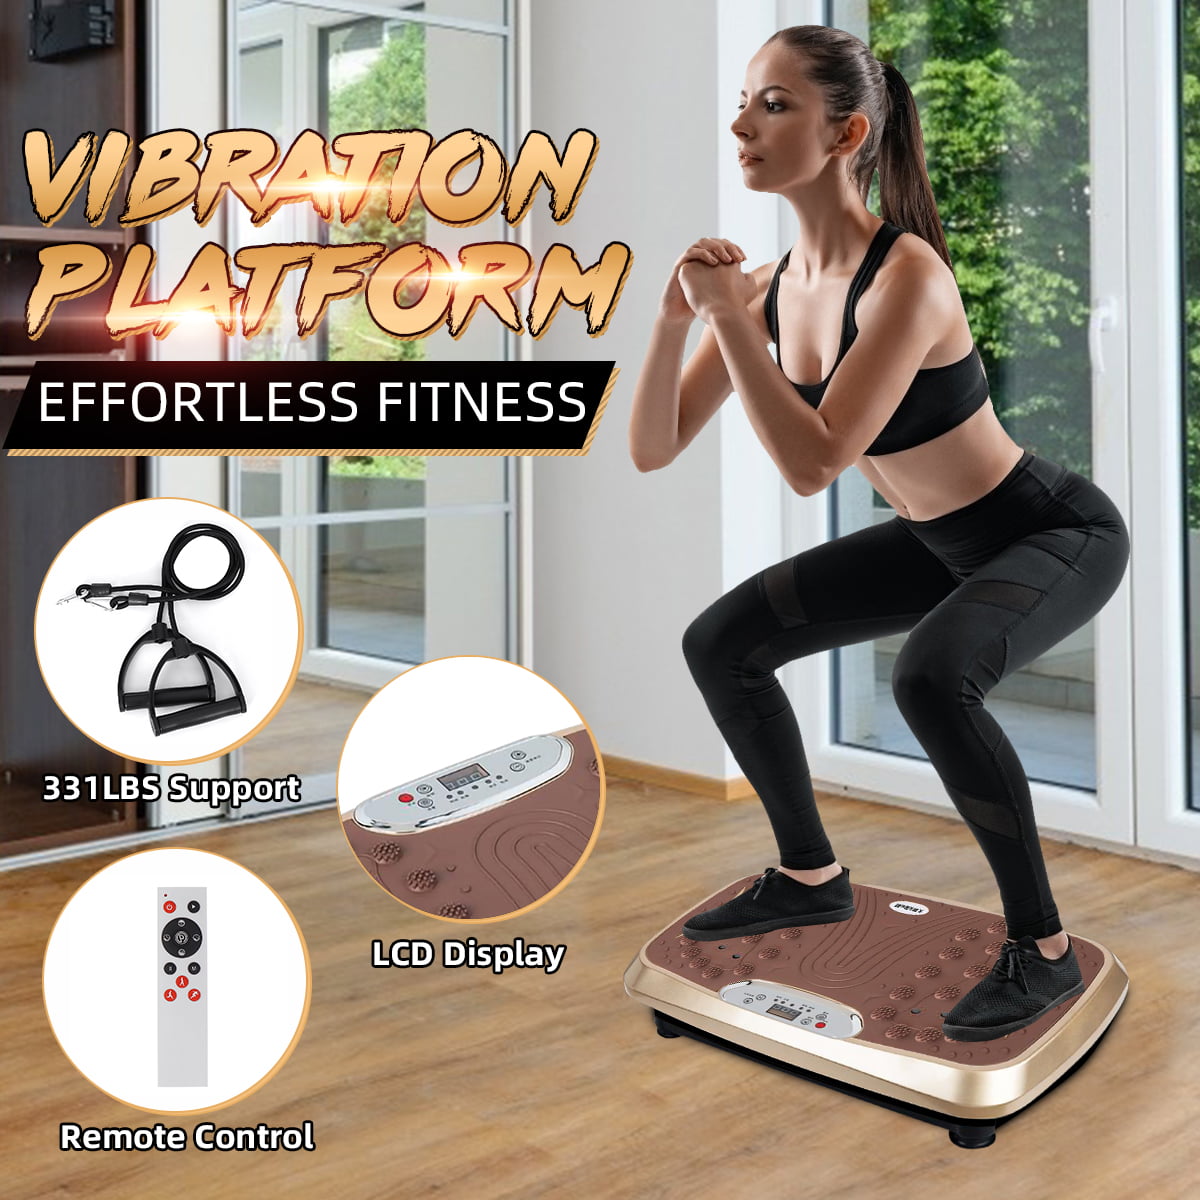 Details about   Vibration Platform Plate Whole Body Slim Exercise Fitness Massager Machine 